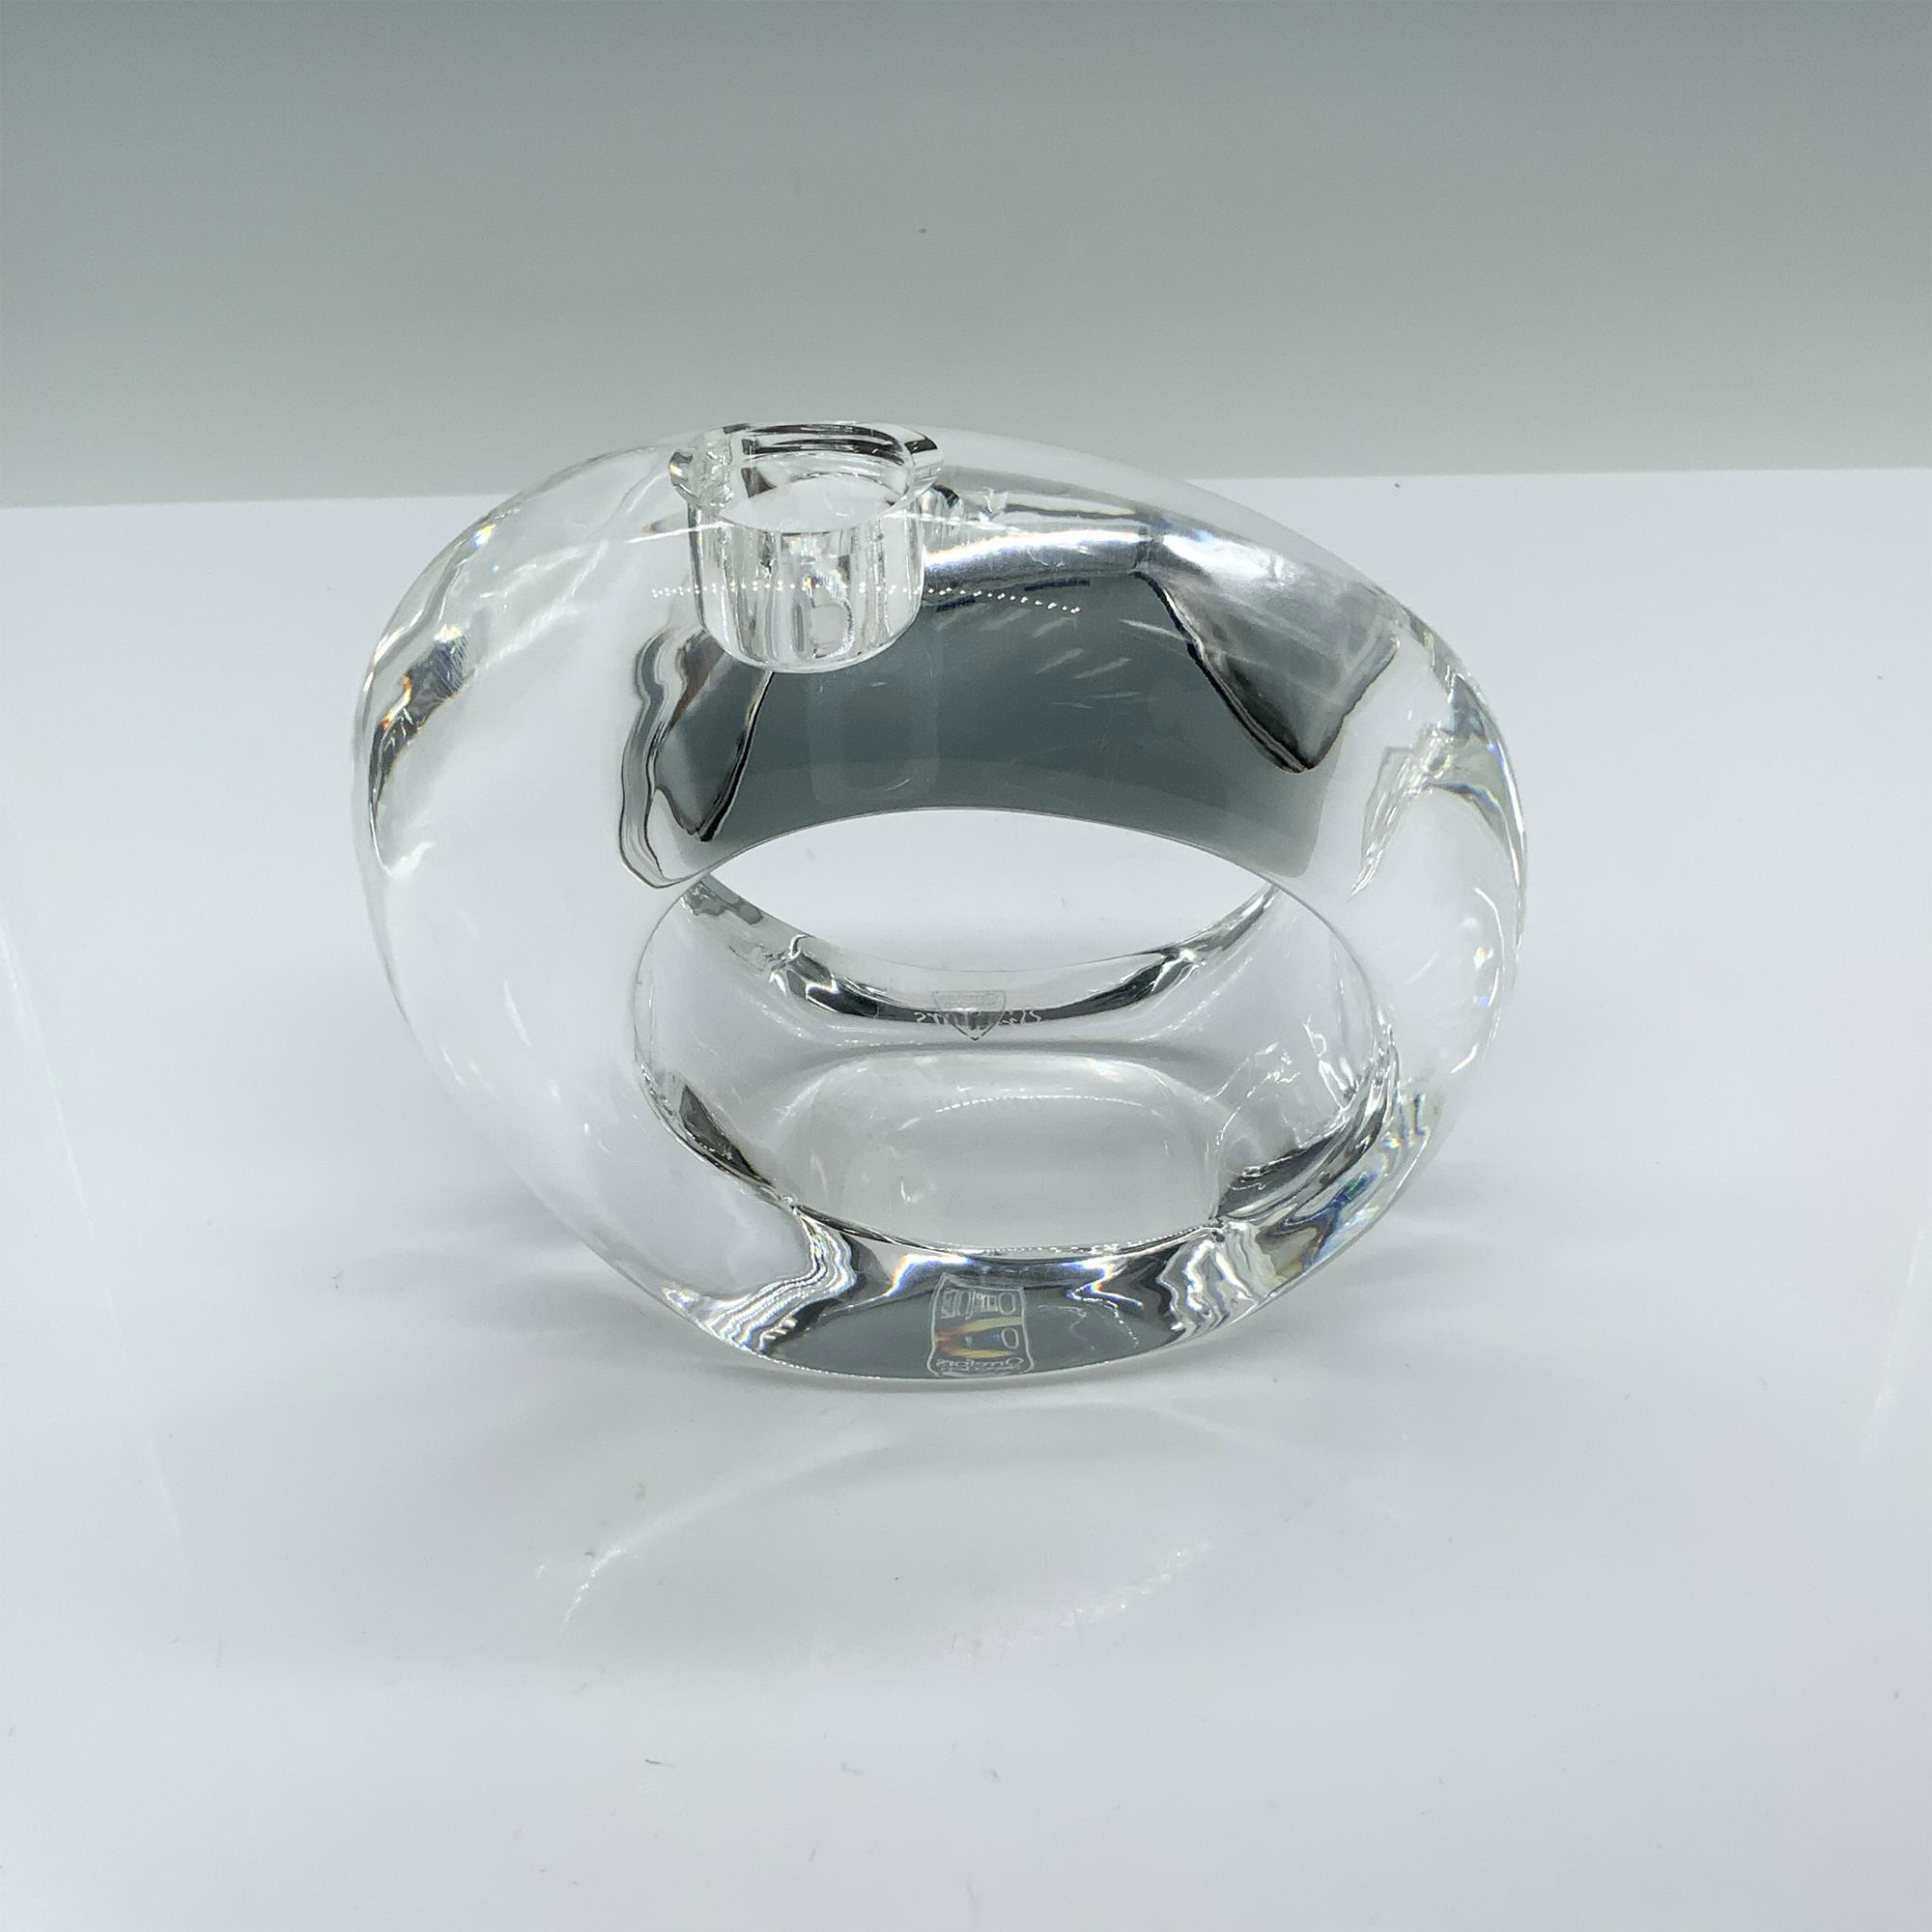 Orrefors Crystal Avlang Oval Candle Holder - Image 2 of 5